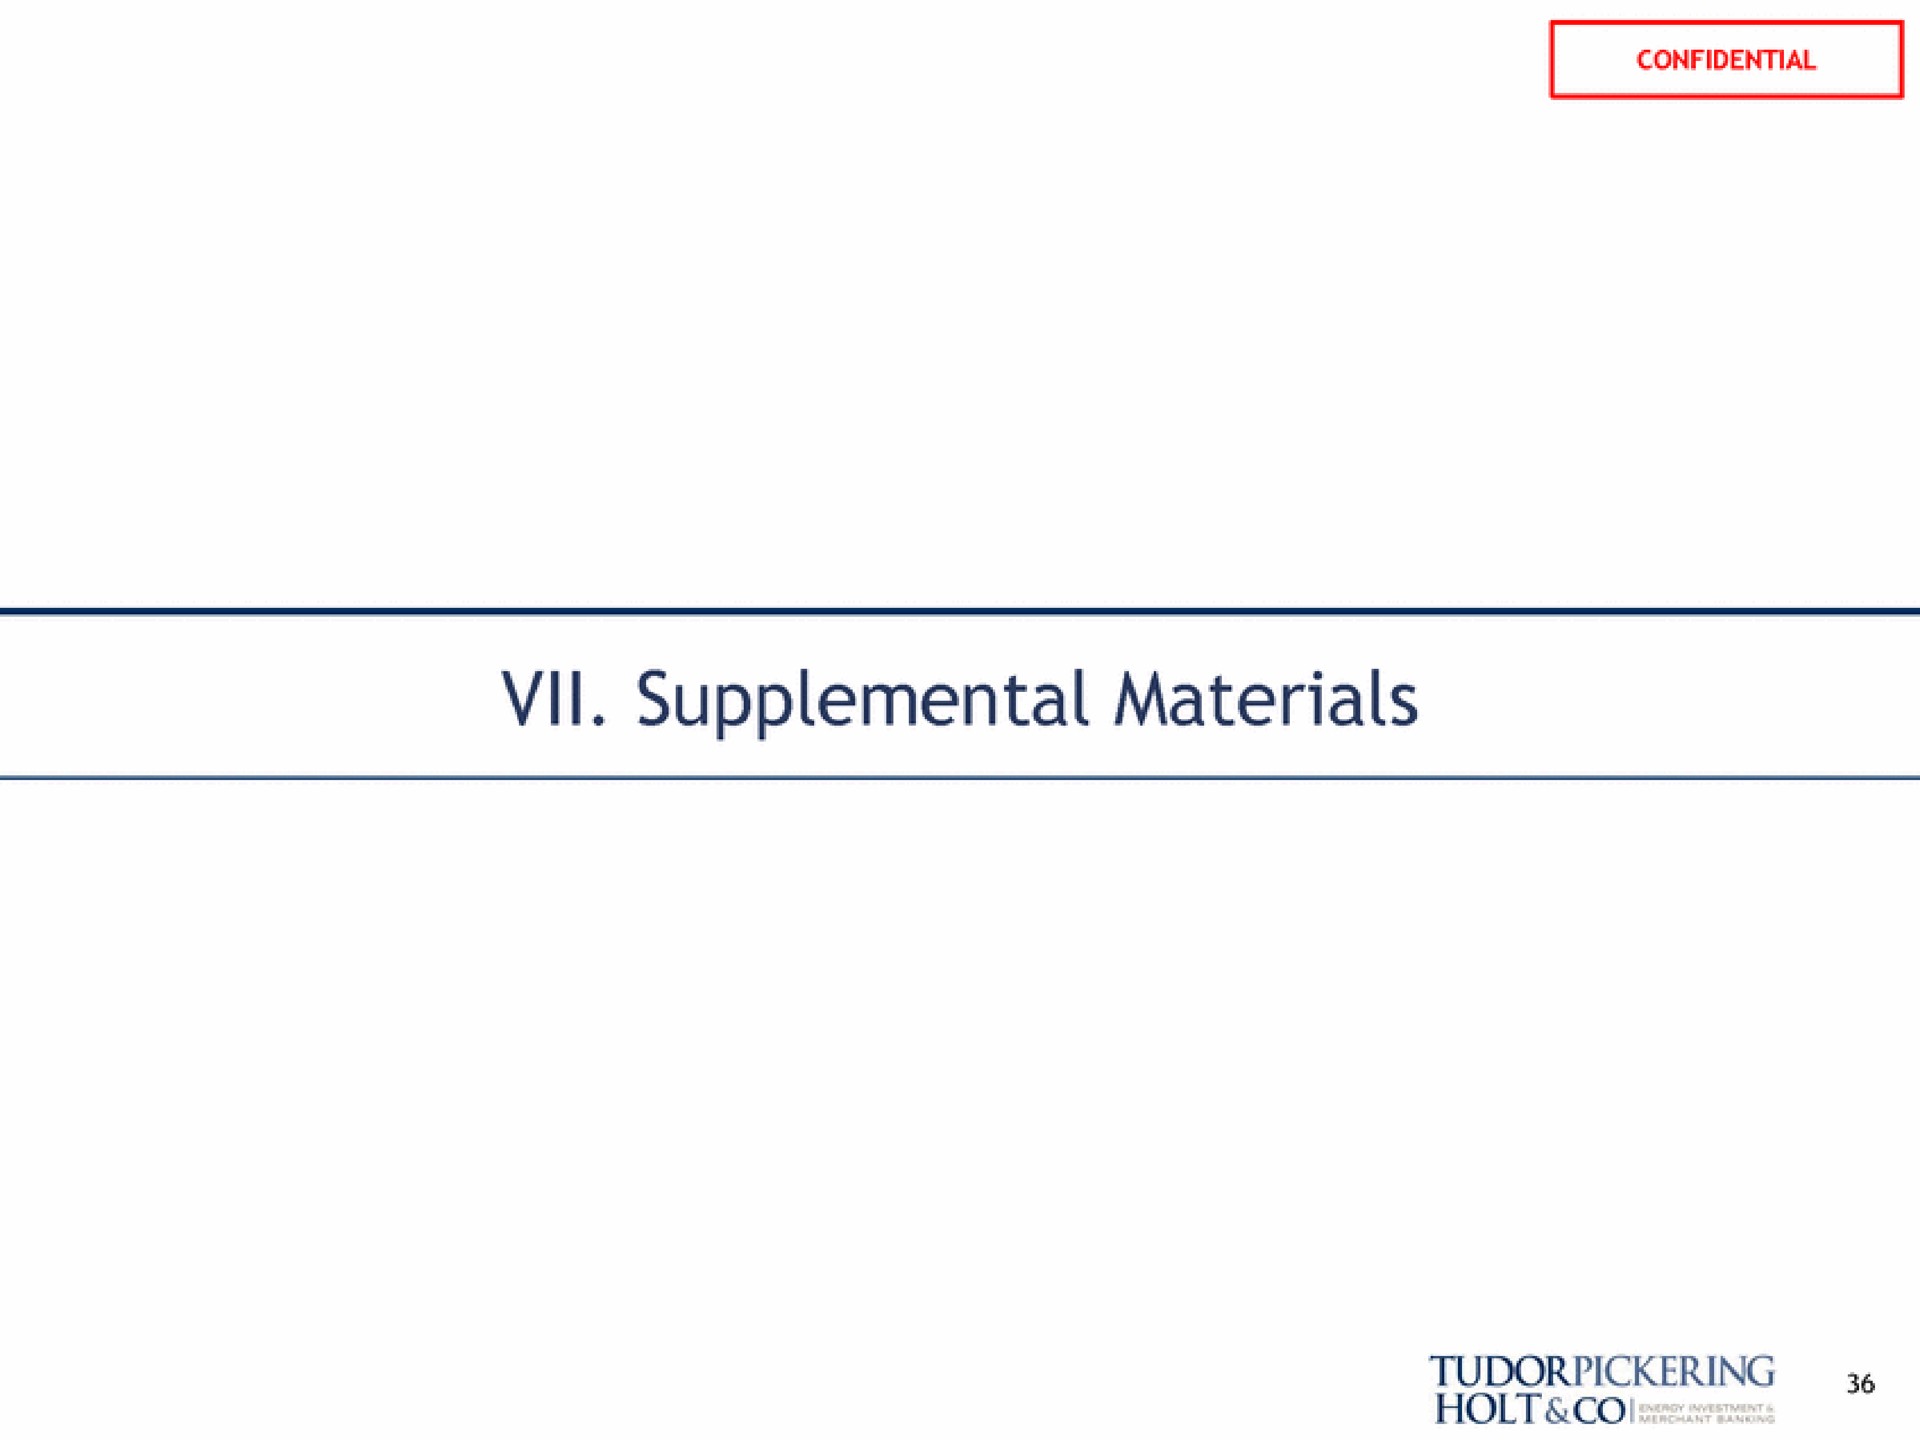 supplemental materials bolt ego | Tudor, Pickering, Holt & Co